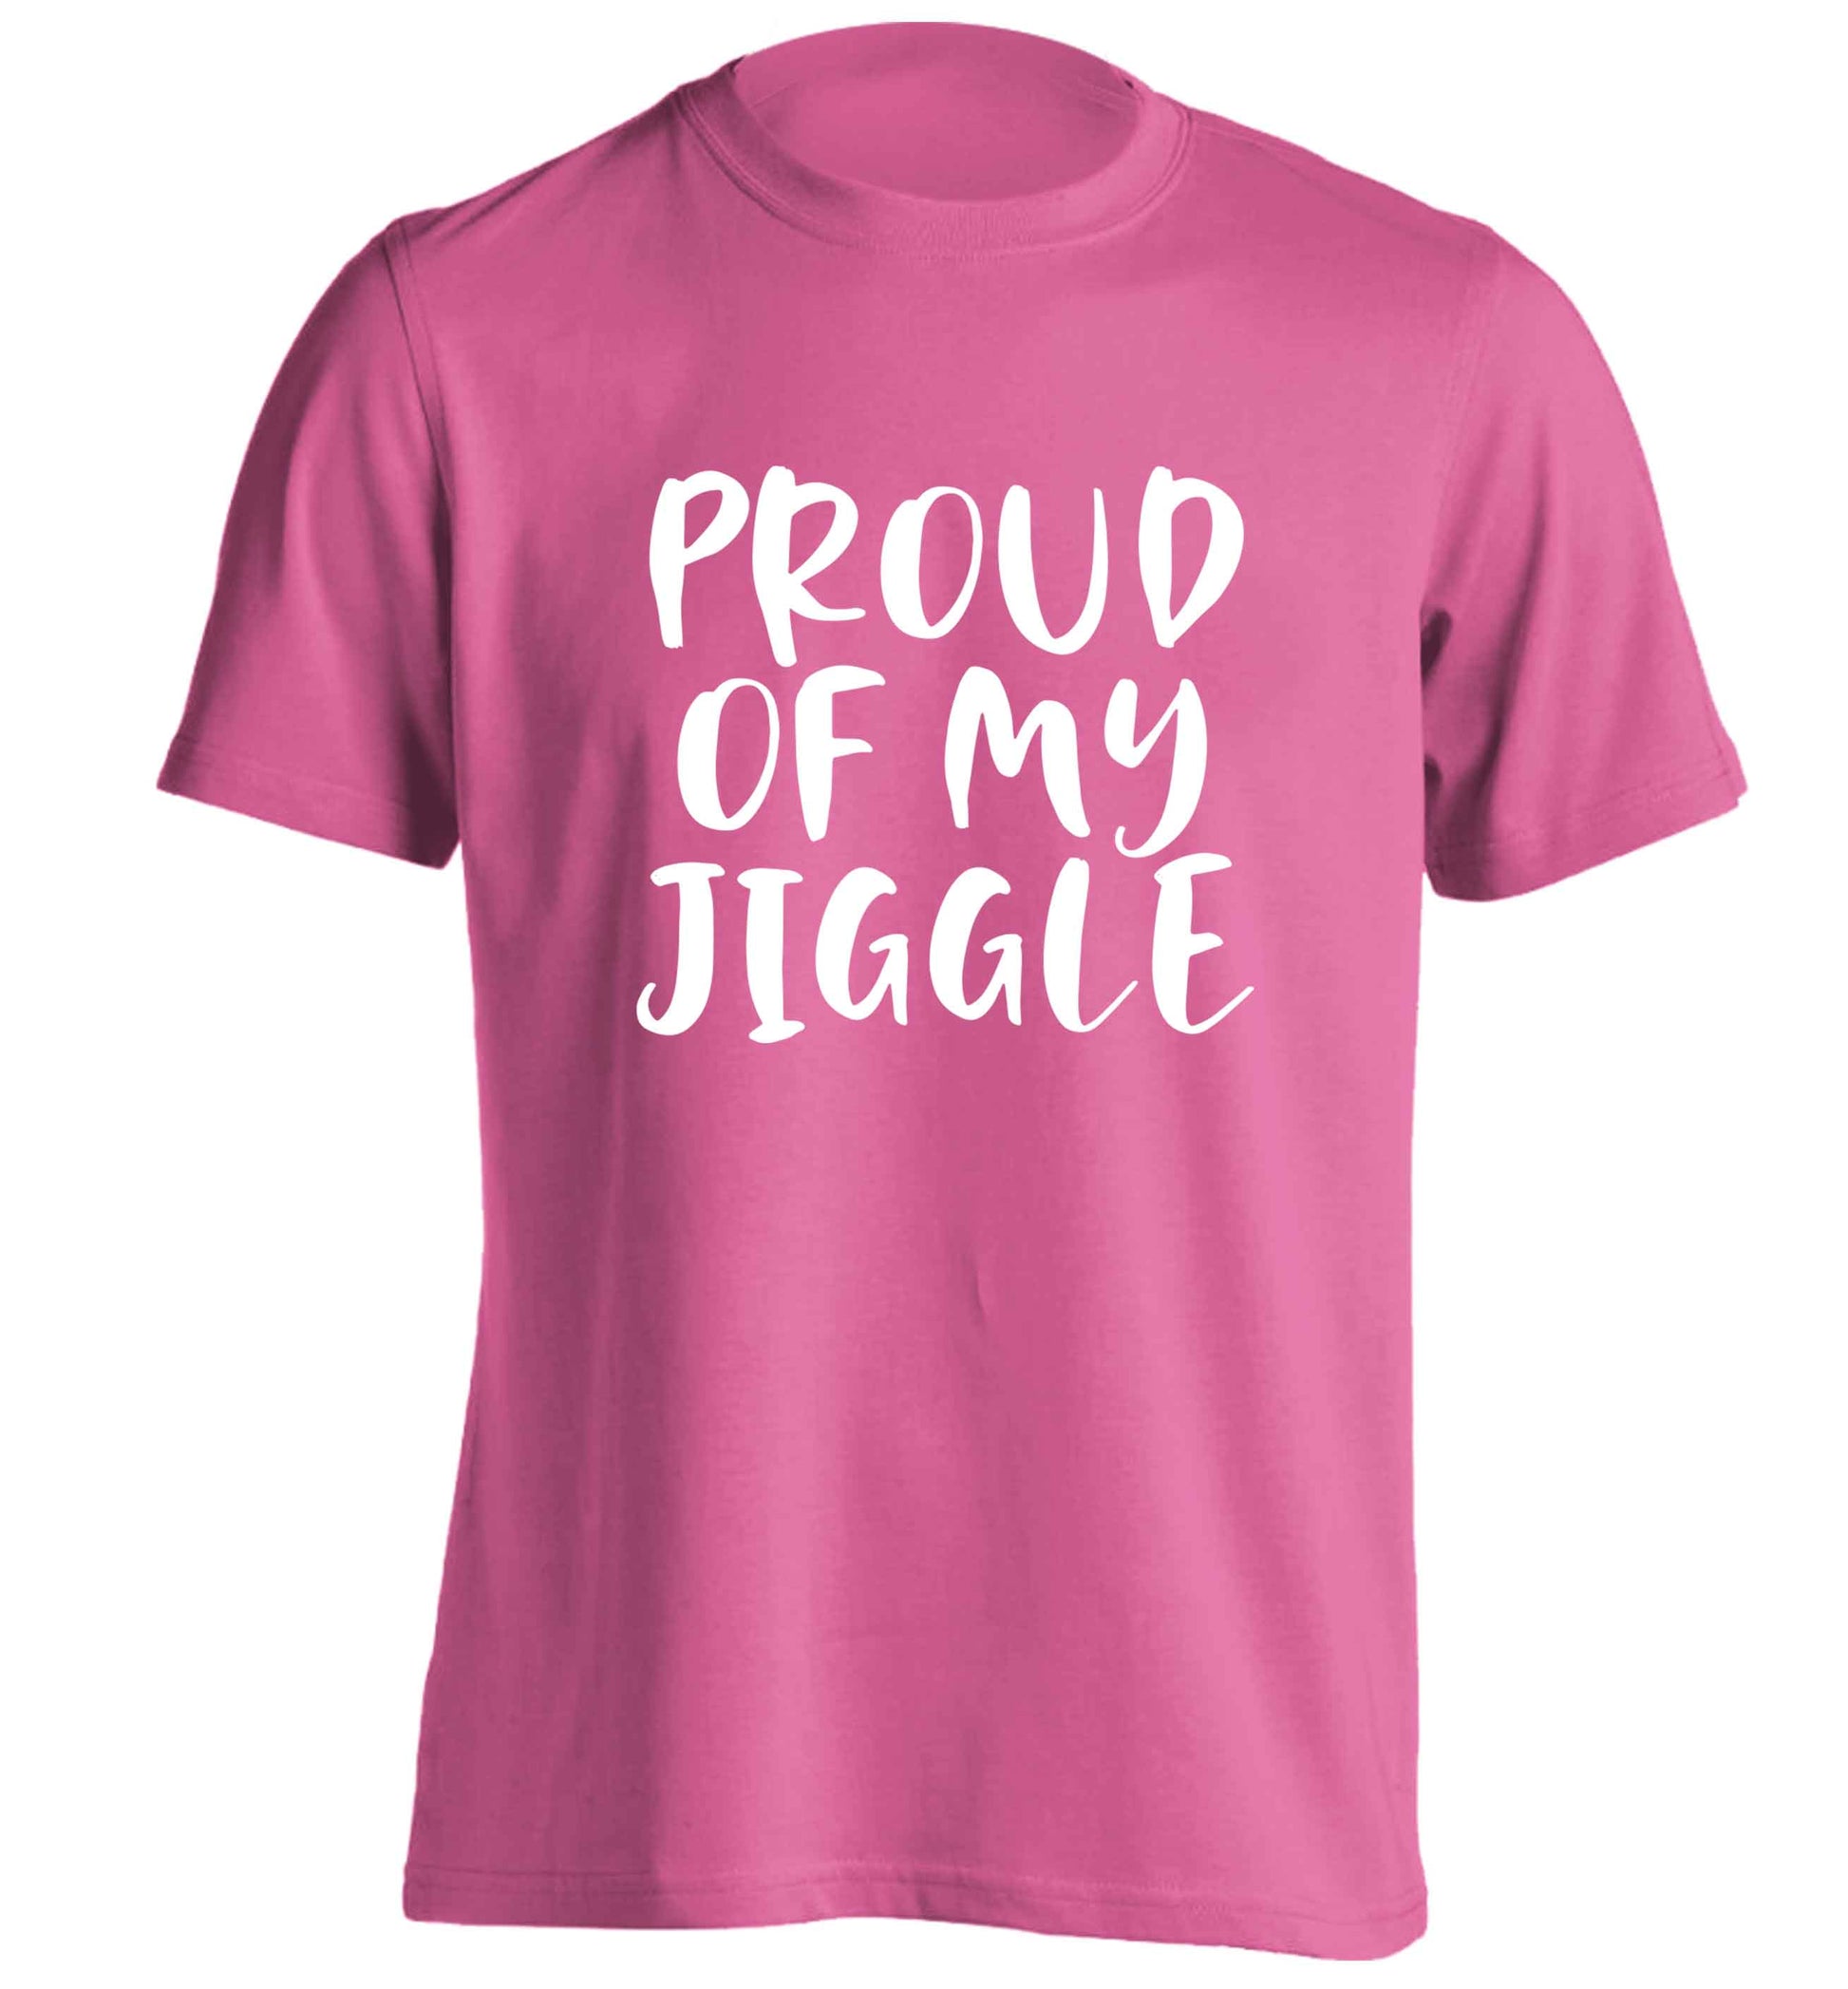 Proud of my jiggle adults unisex pink Tshirt 2XL